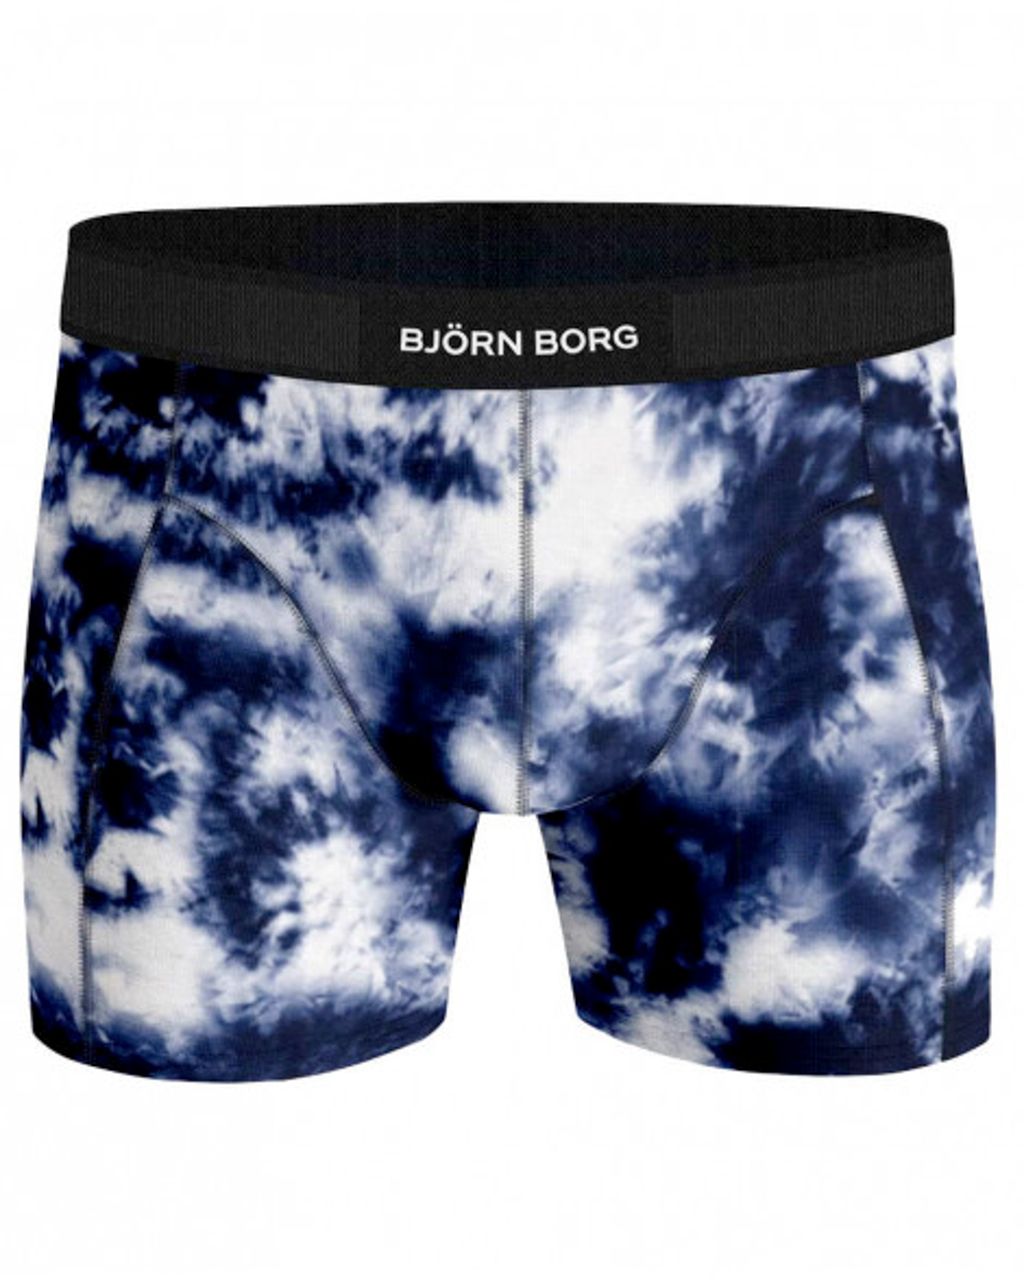 Björn Borg Boxershort Blauw 078687-001-L